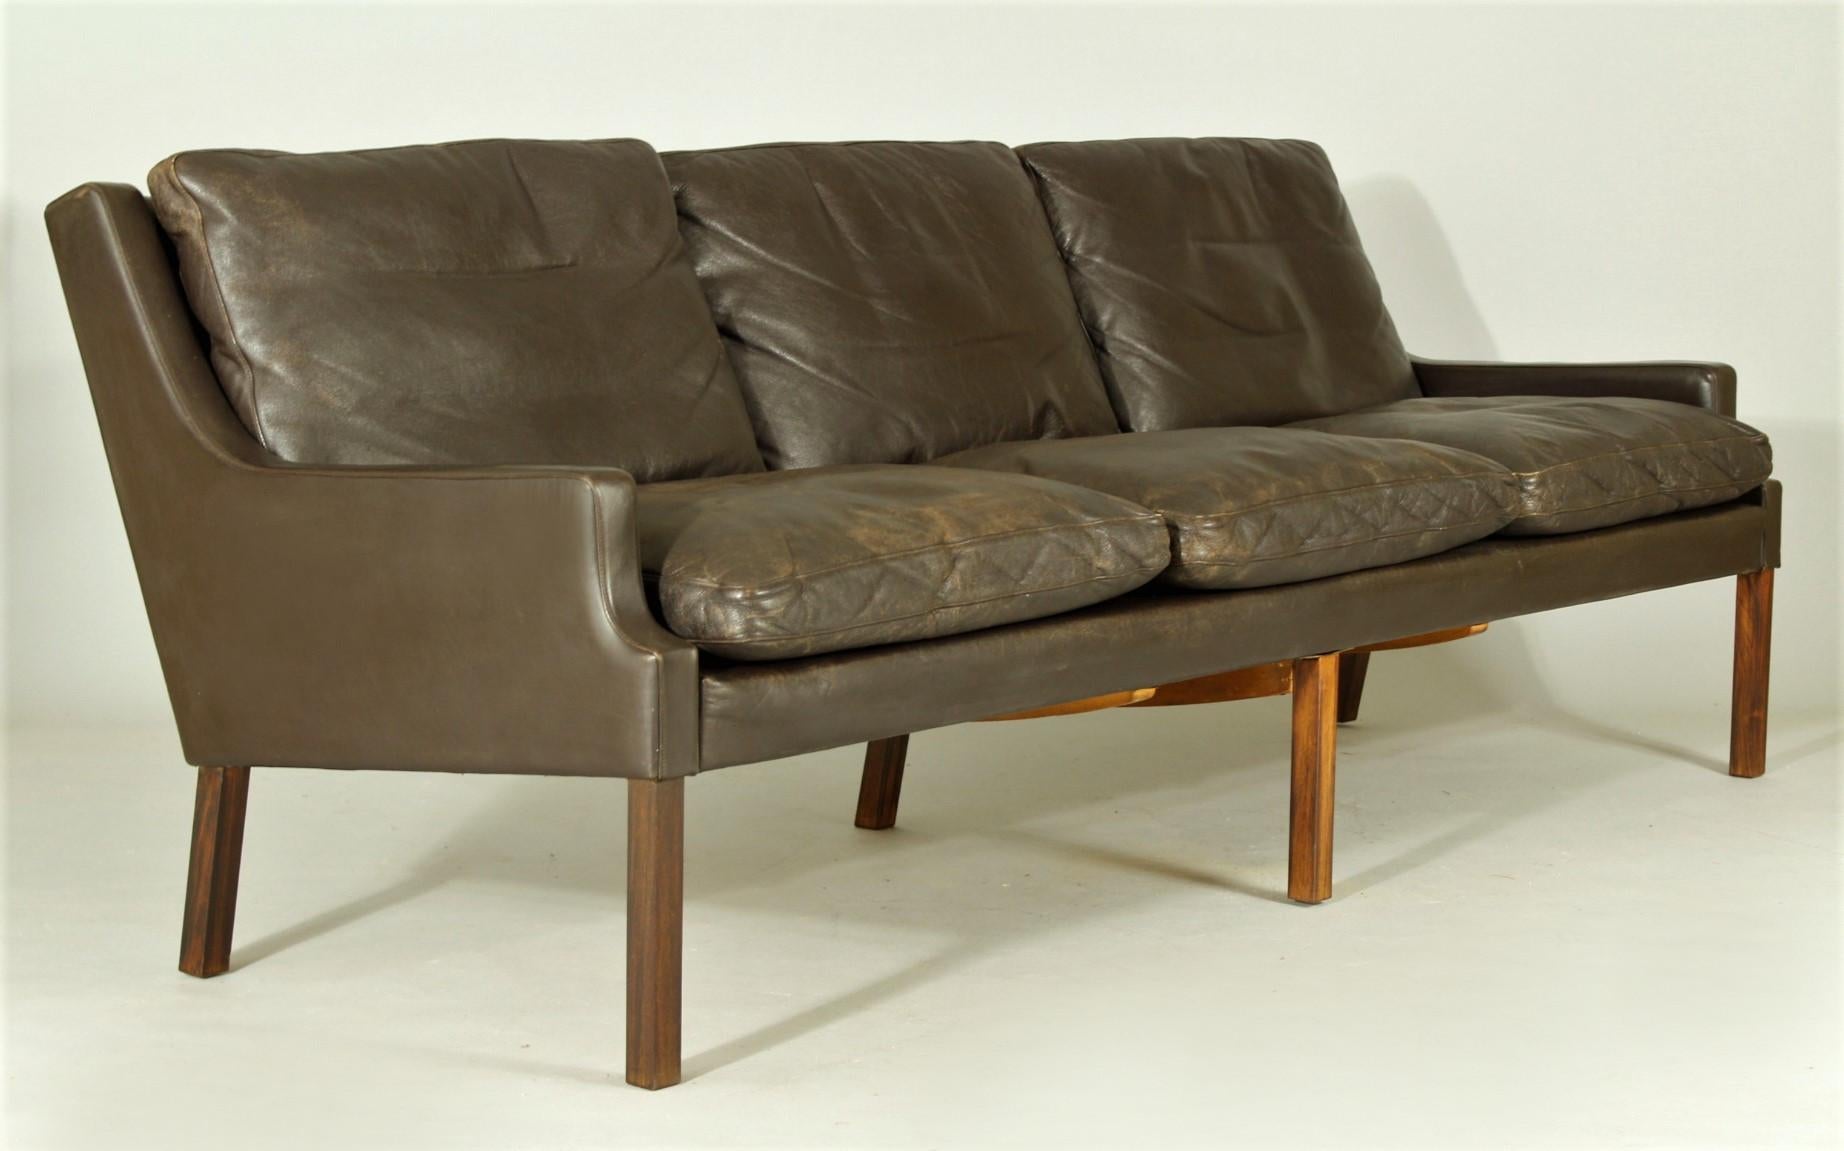 20th Century 1960s Leather Sofa by Rud Thygesen for AS Vejen Polstermøbelfabrik, Denmark